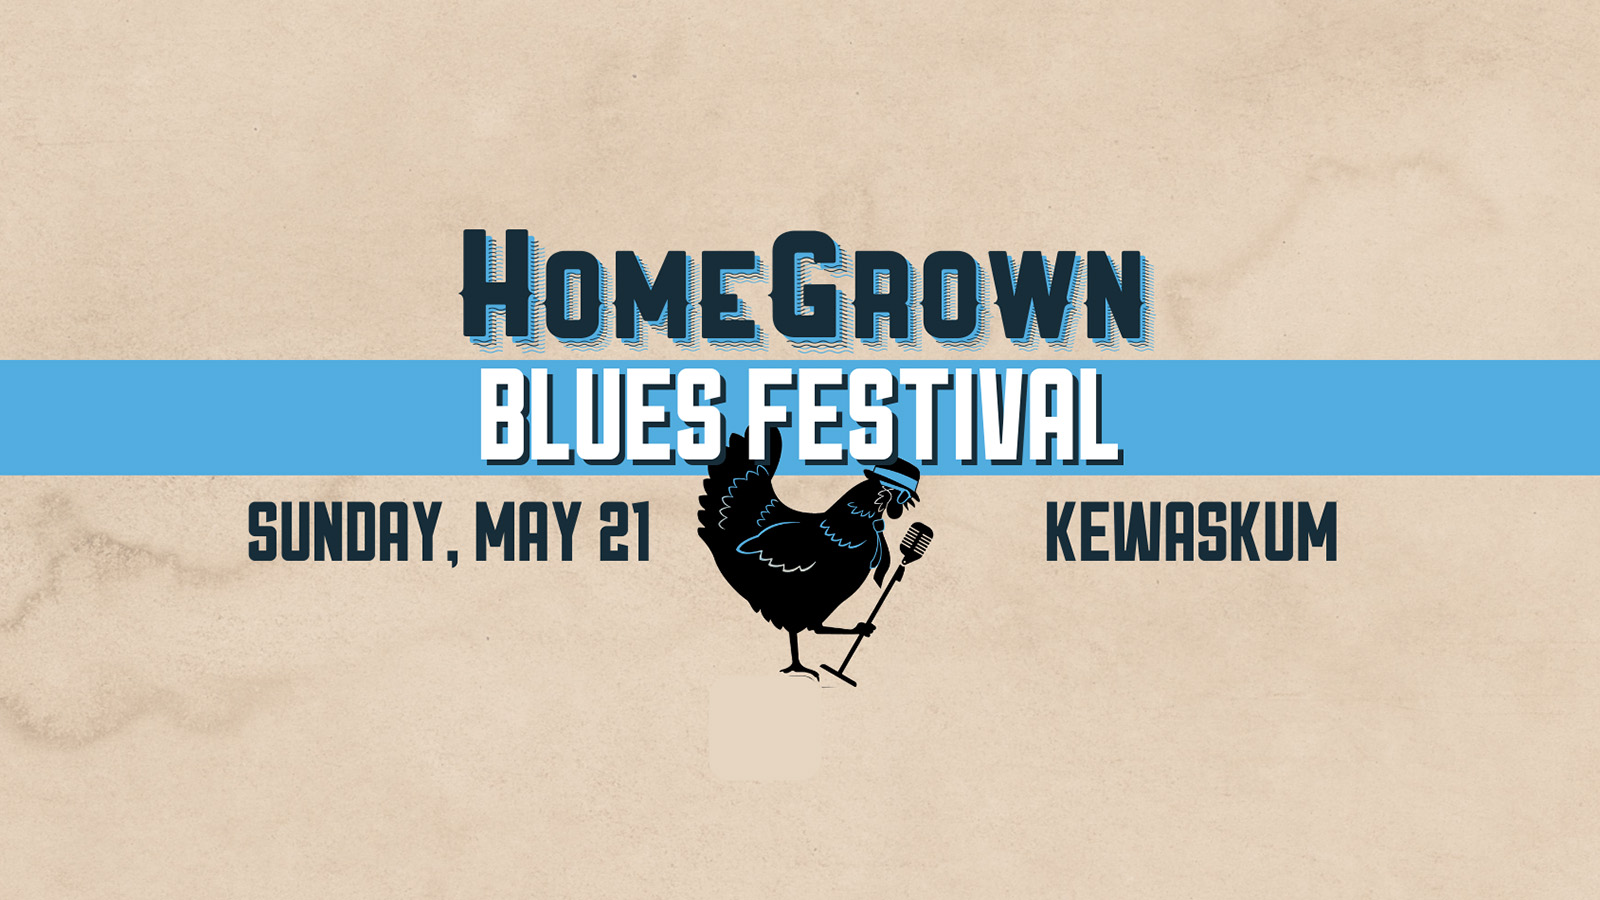 Homegrown Blues Festival logo